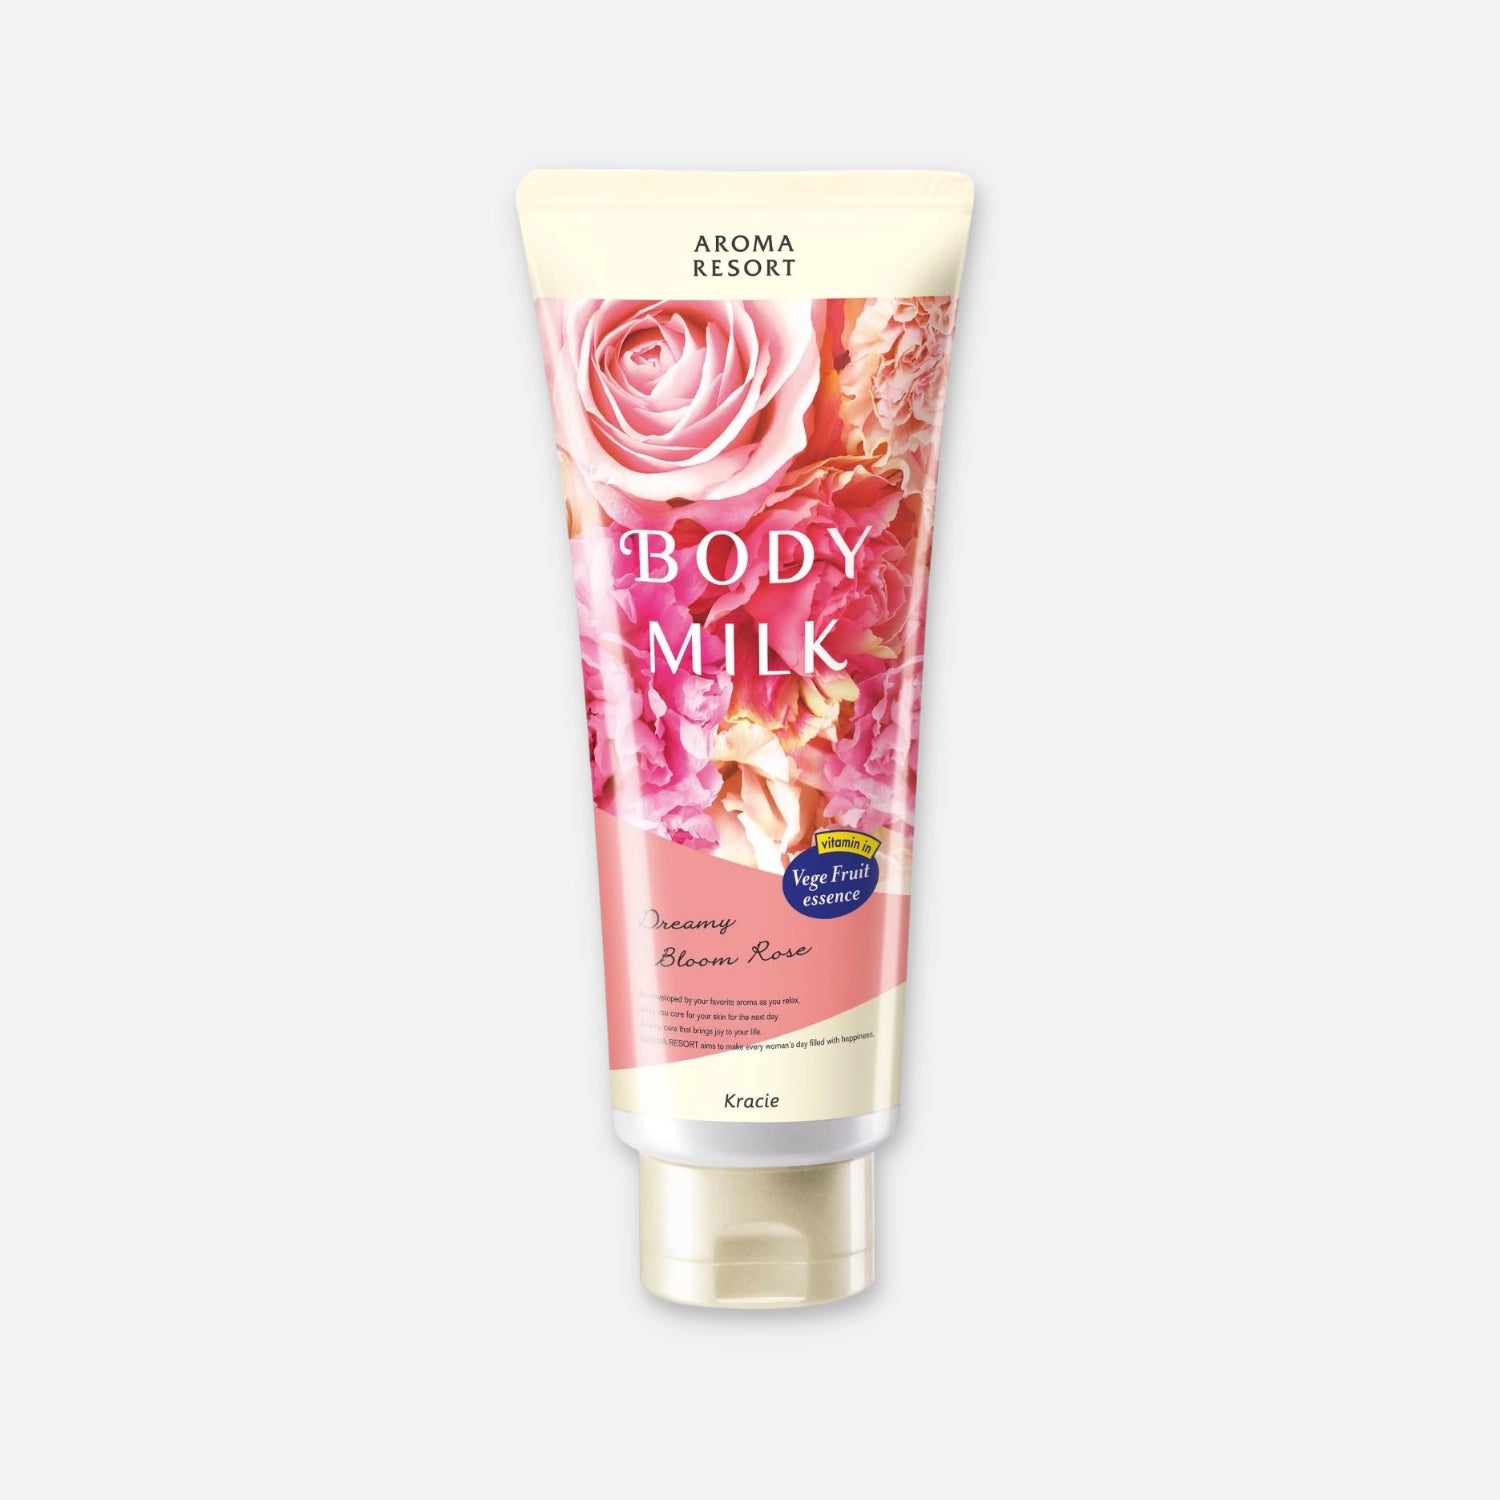 Aroma Resort Body Milk Dreamy Bloom Rose 200g - Buy Me Japan